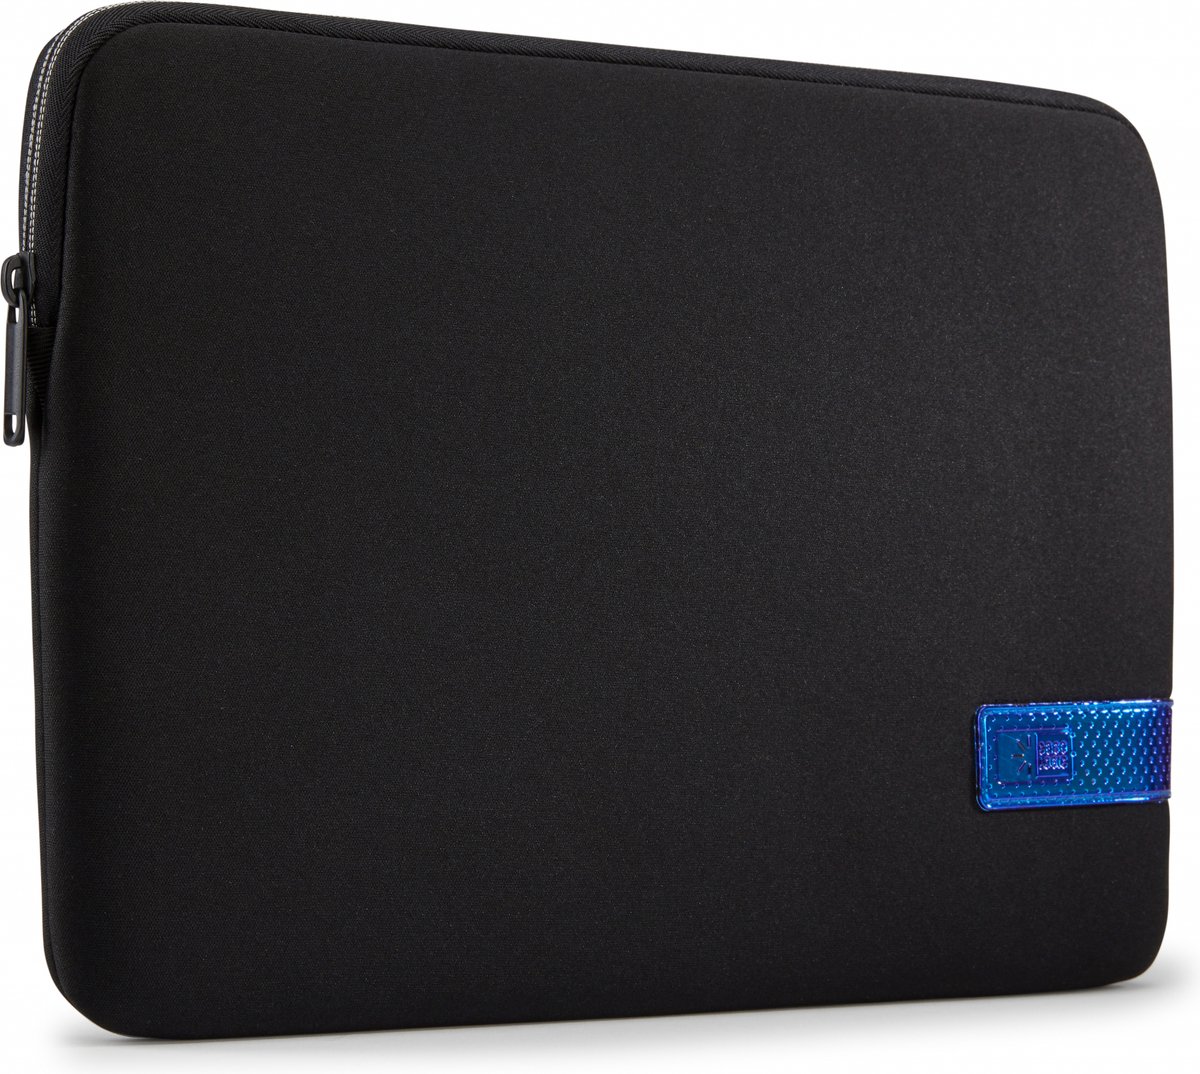 Case Logic Reflect - Laptopsleeve - Macbook Pro - 13 inch - Zwart